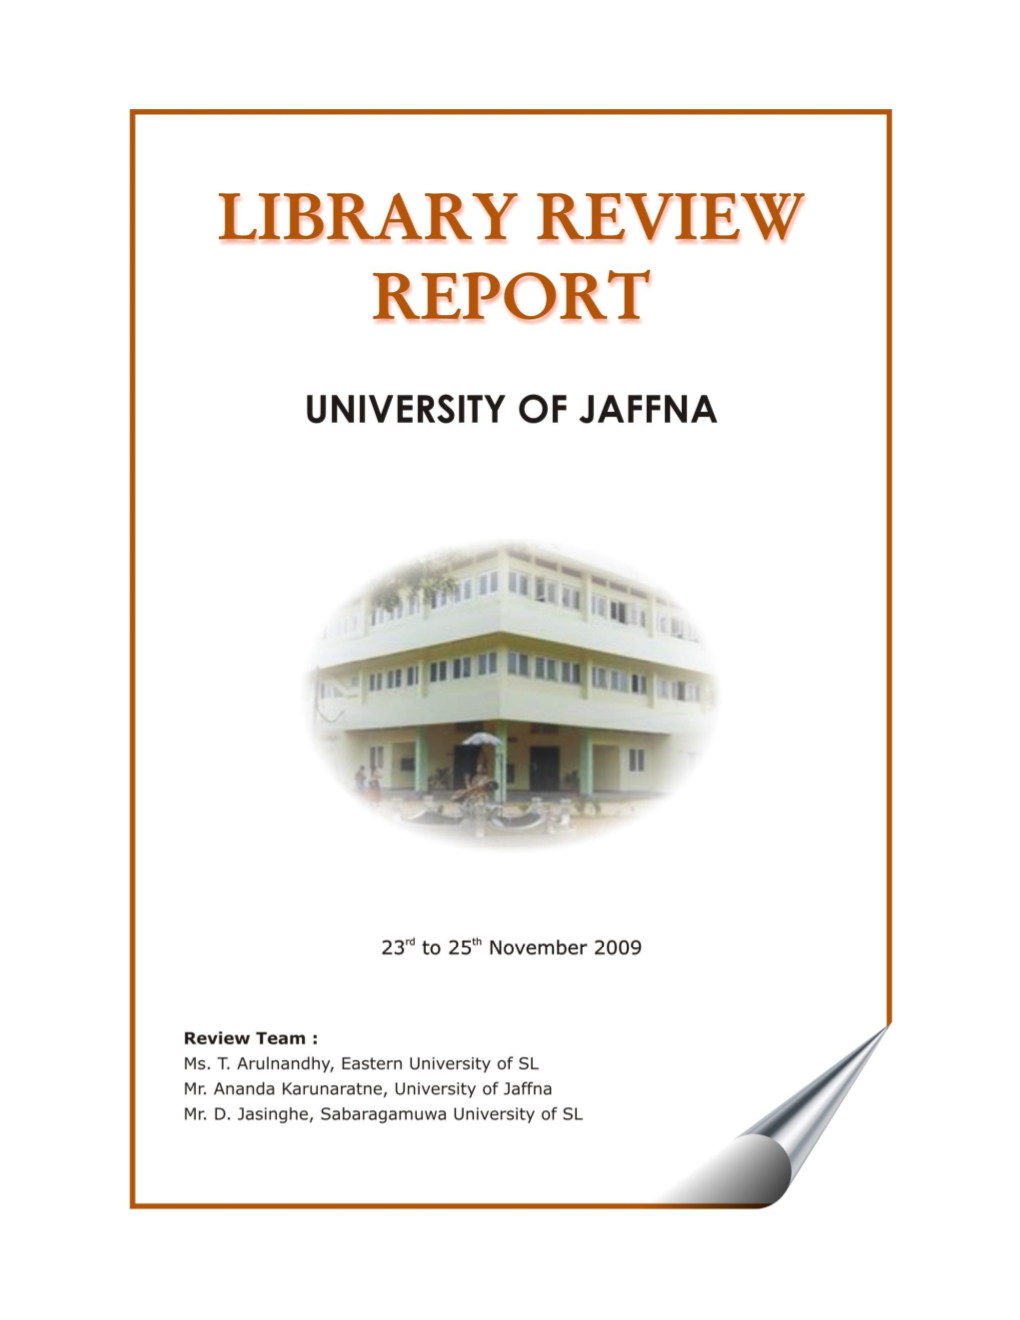 Library Review Report, University of Jaffna -.: UGC WEB PORTAL